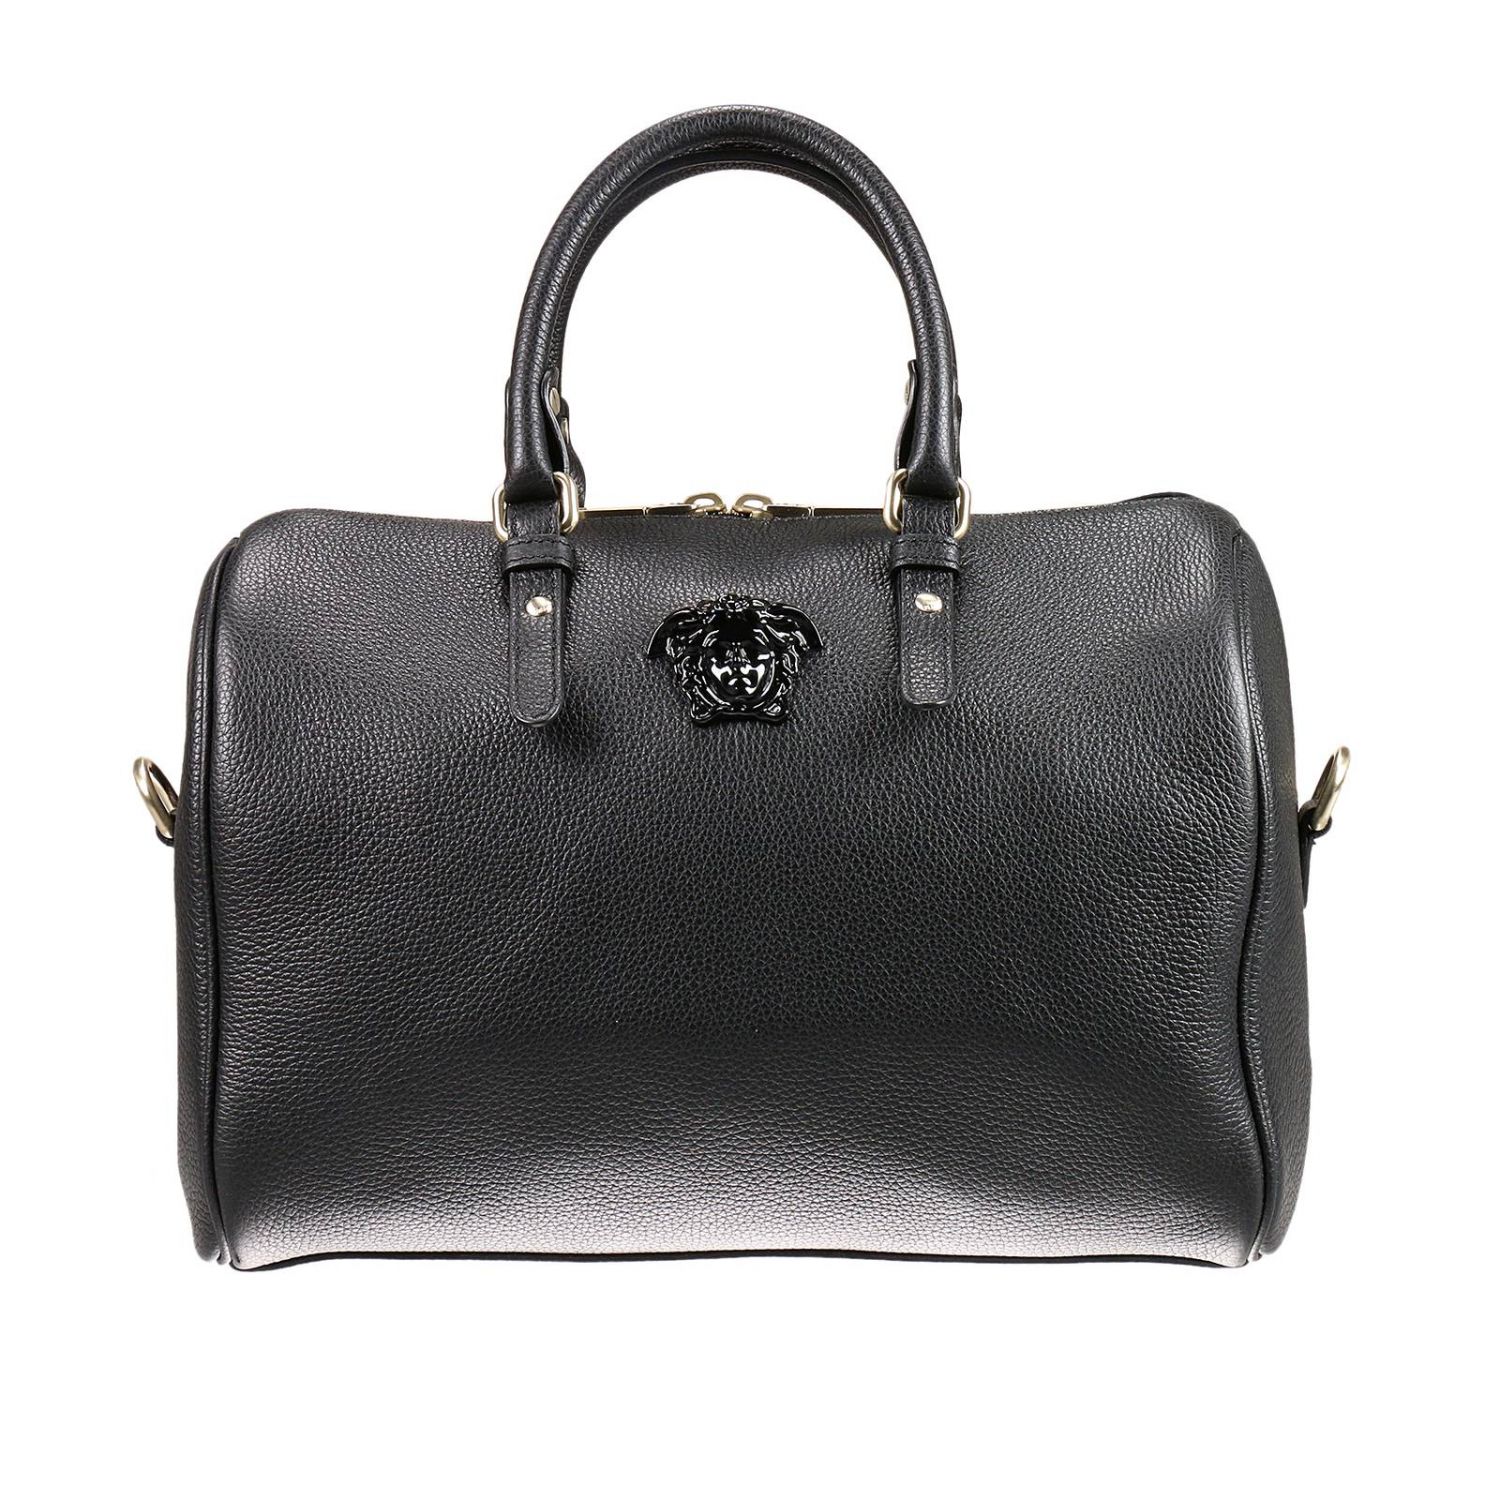 Most Expensive Versace Handbags | IQS Executive